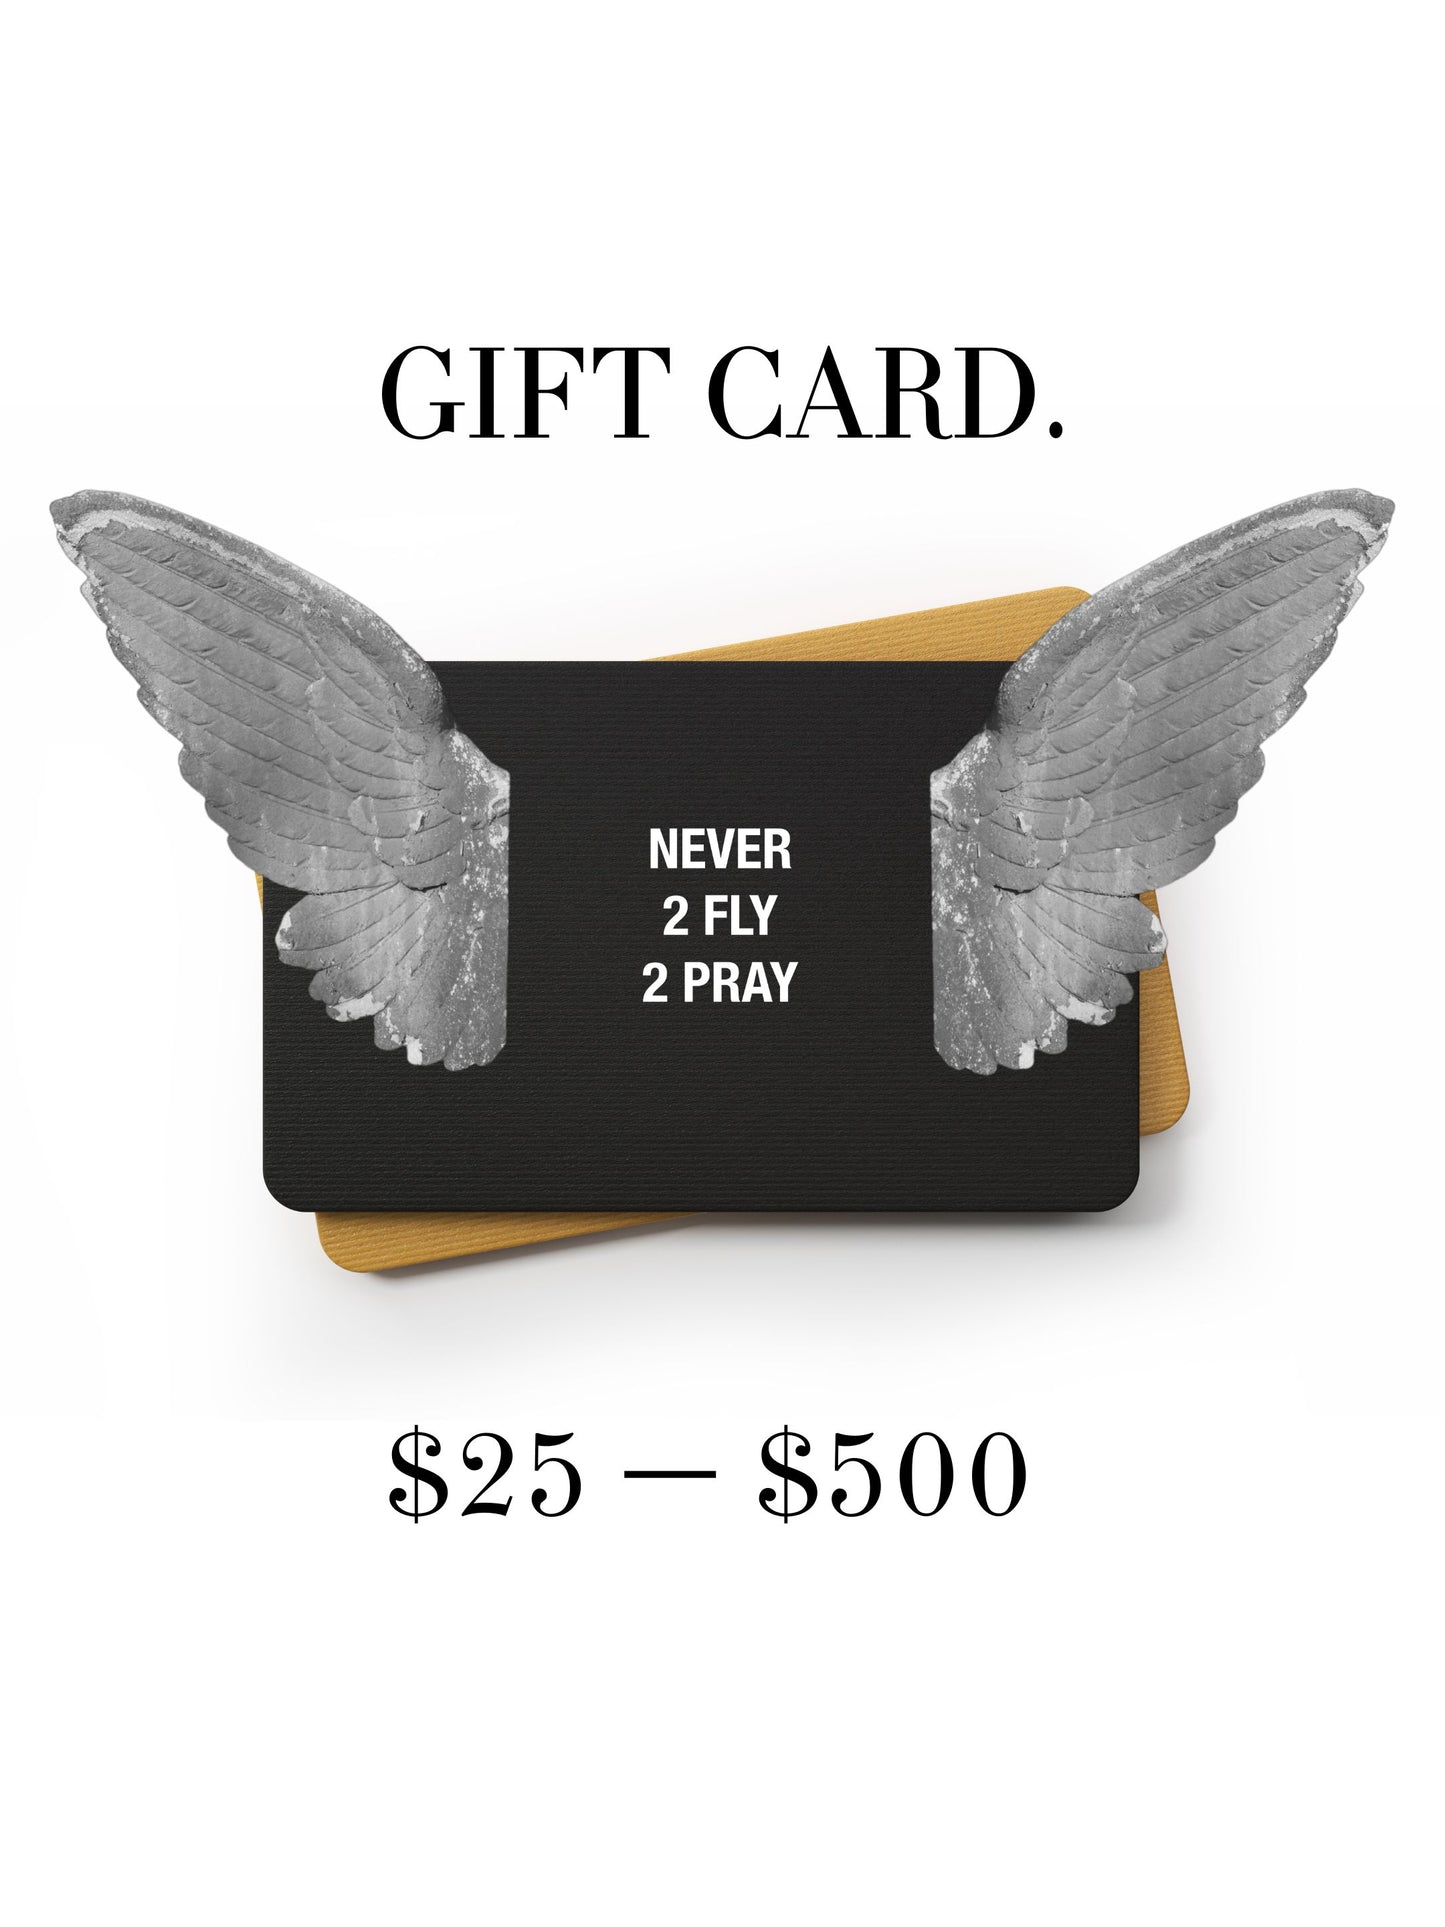 NEVER 2 FLY 2 PRAY Gift Card